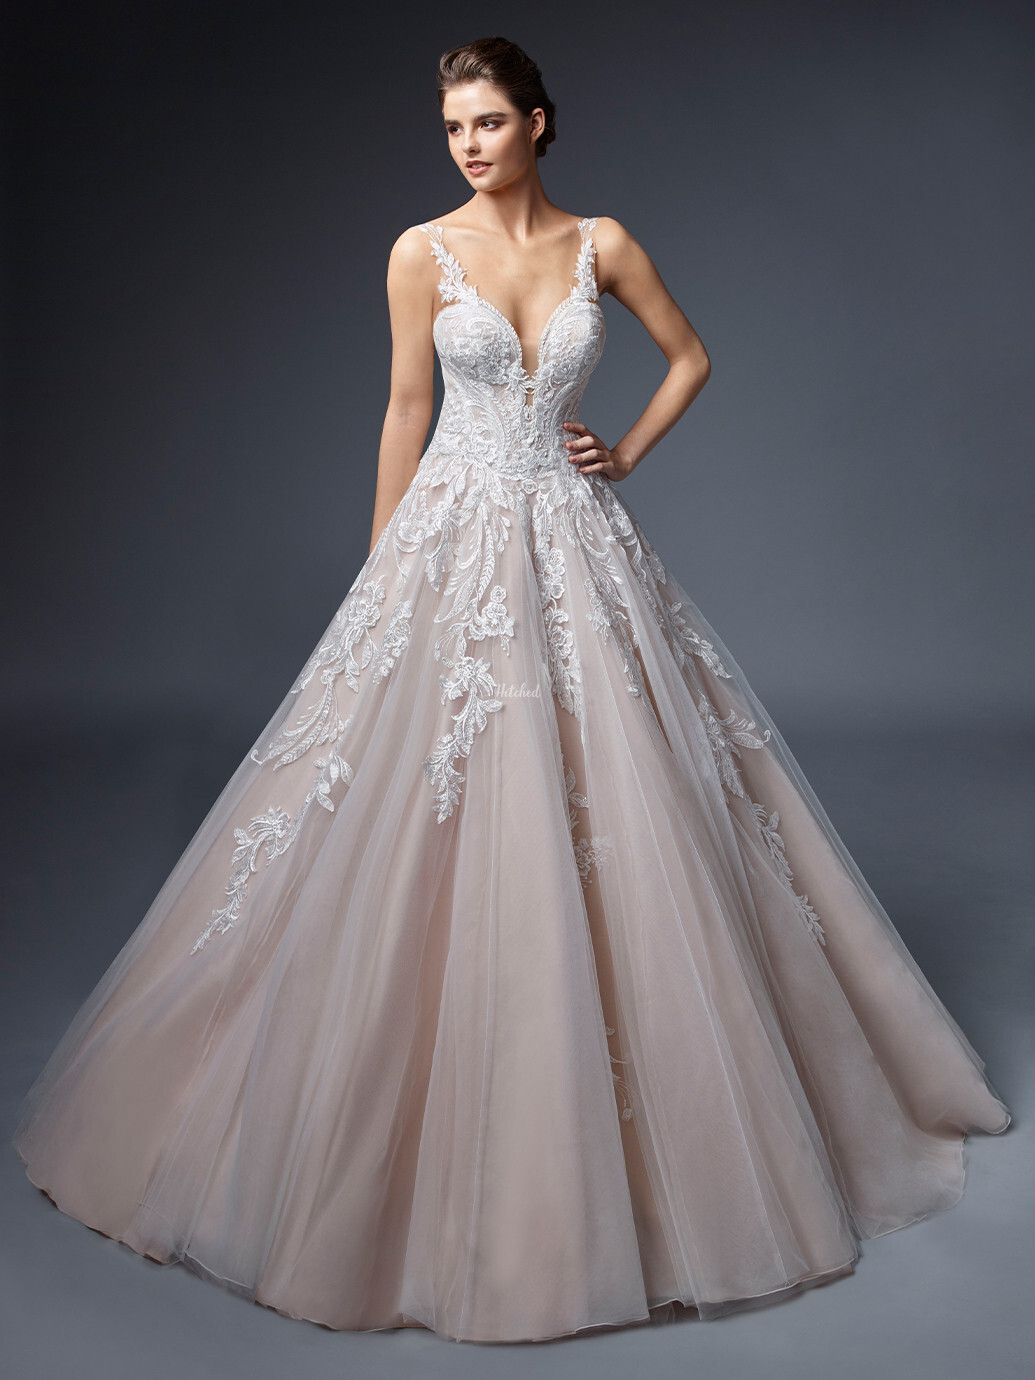 Emmanuelle Wedding Dress from ELYSEE - hitched.co.uk